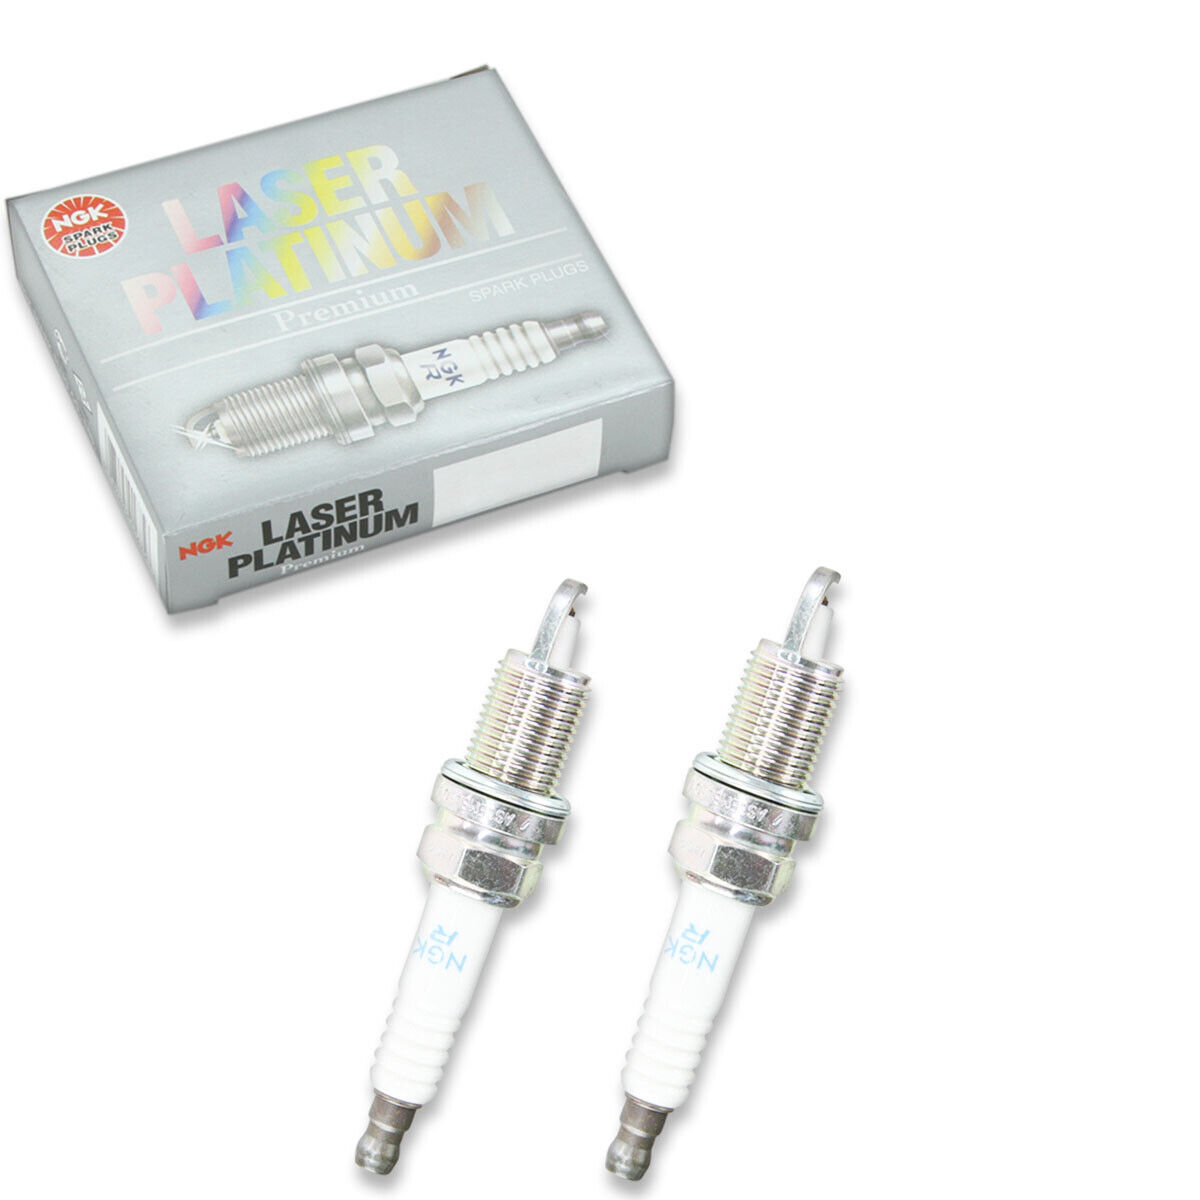 2 pc NGK 7781 ZFR5LP-13G Laser Platinum Spark Plugs for SZFR5LP13G RC12PEPB5 pq